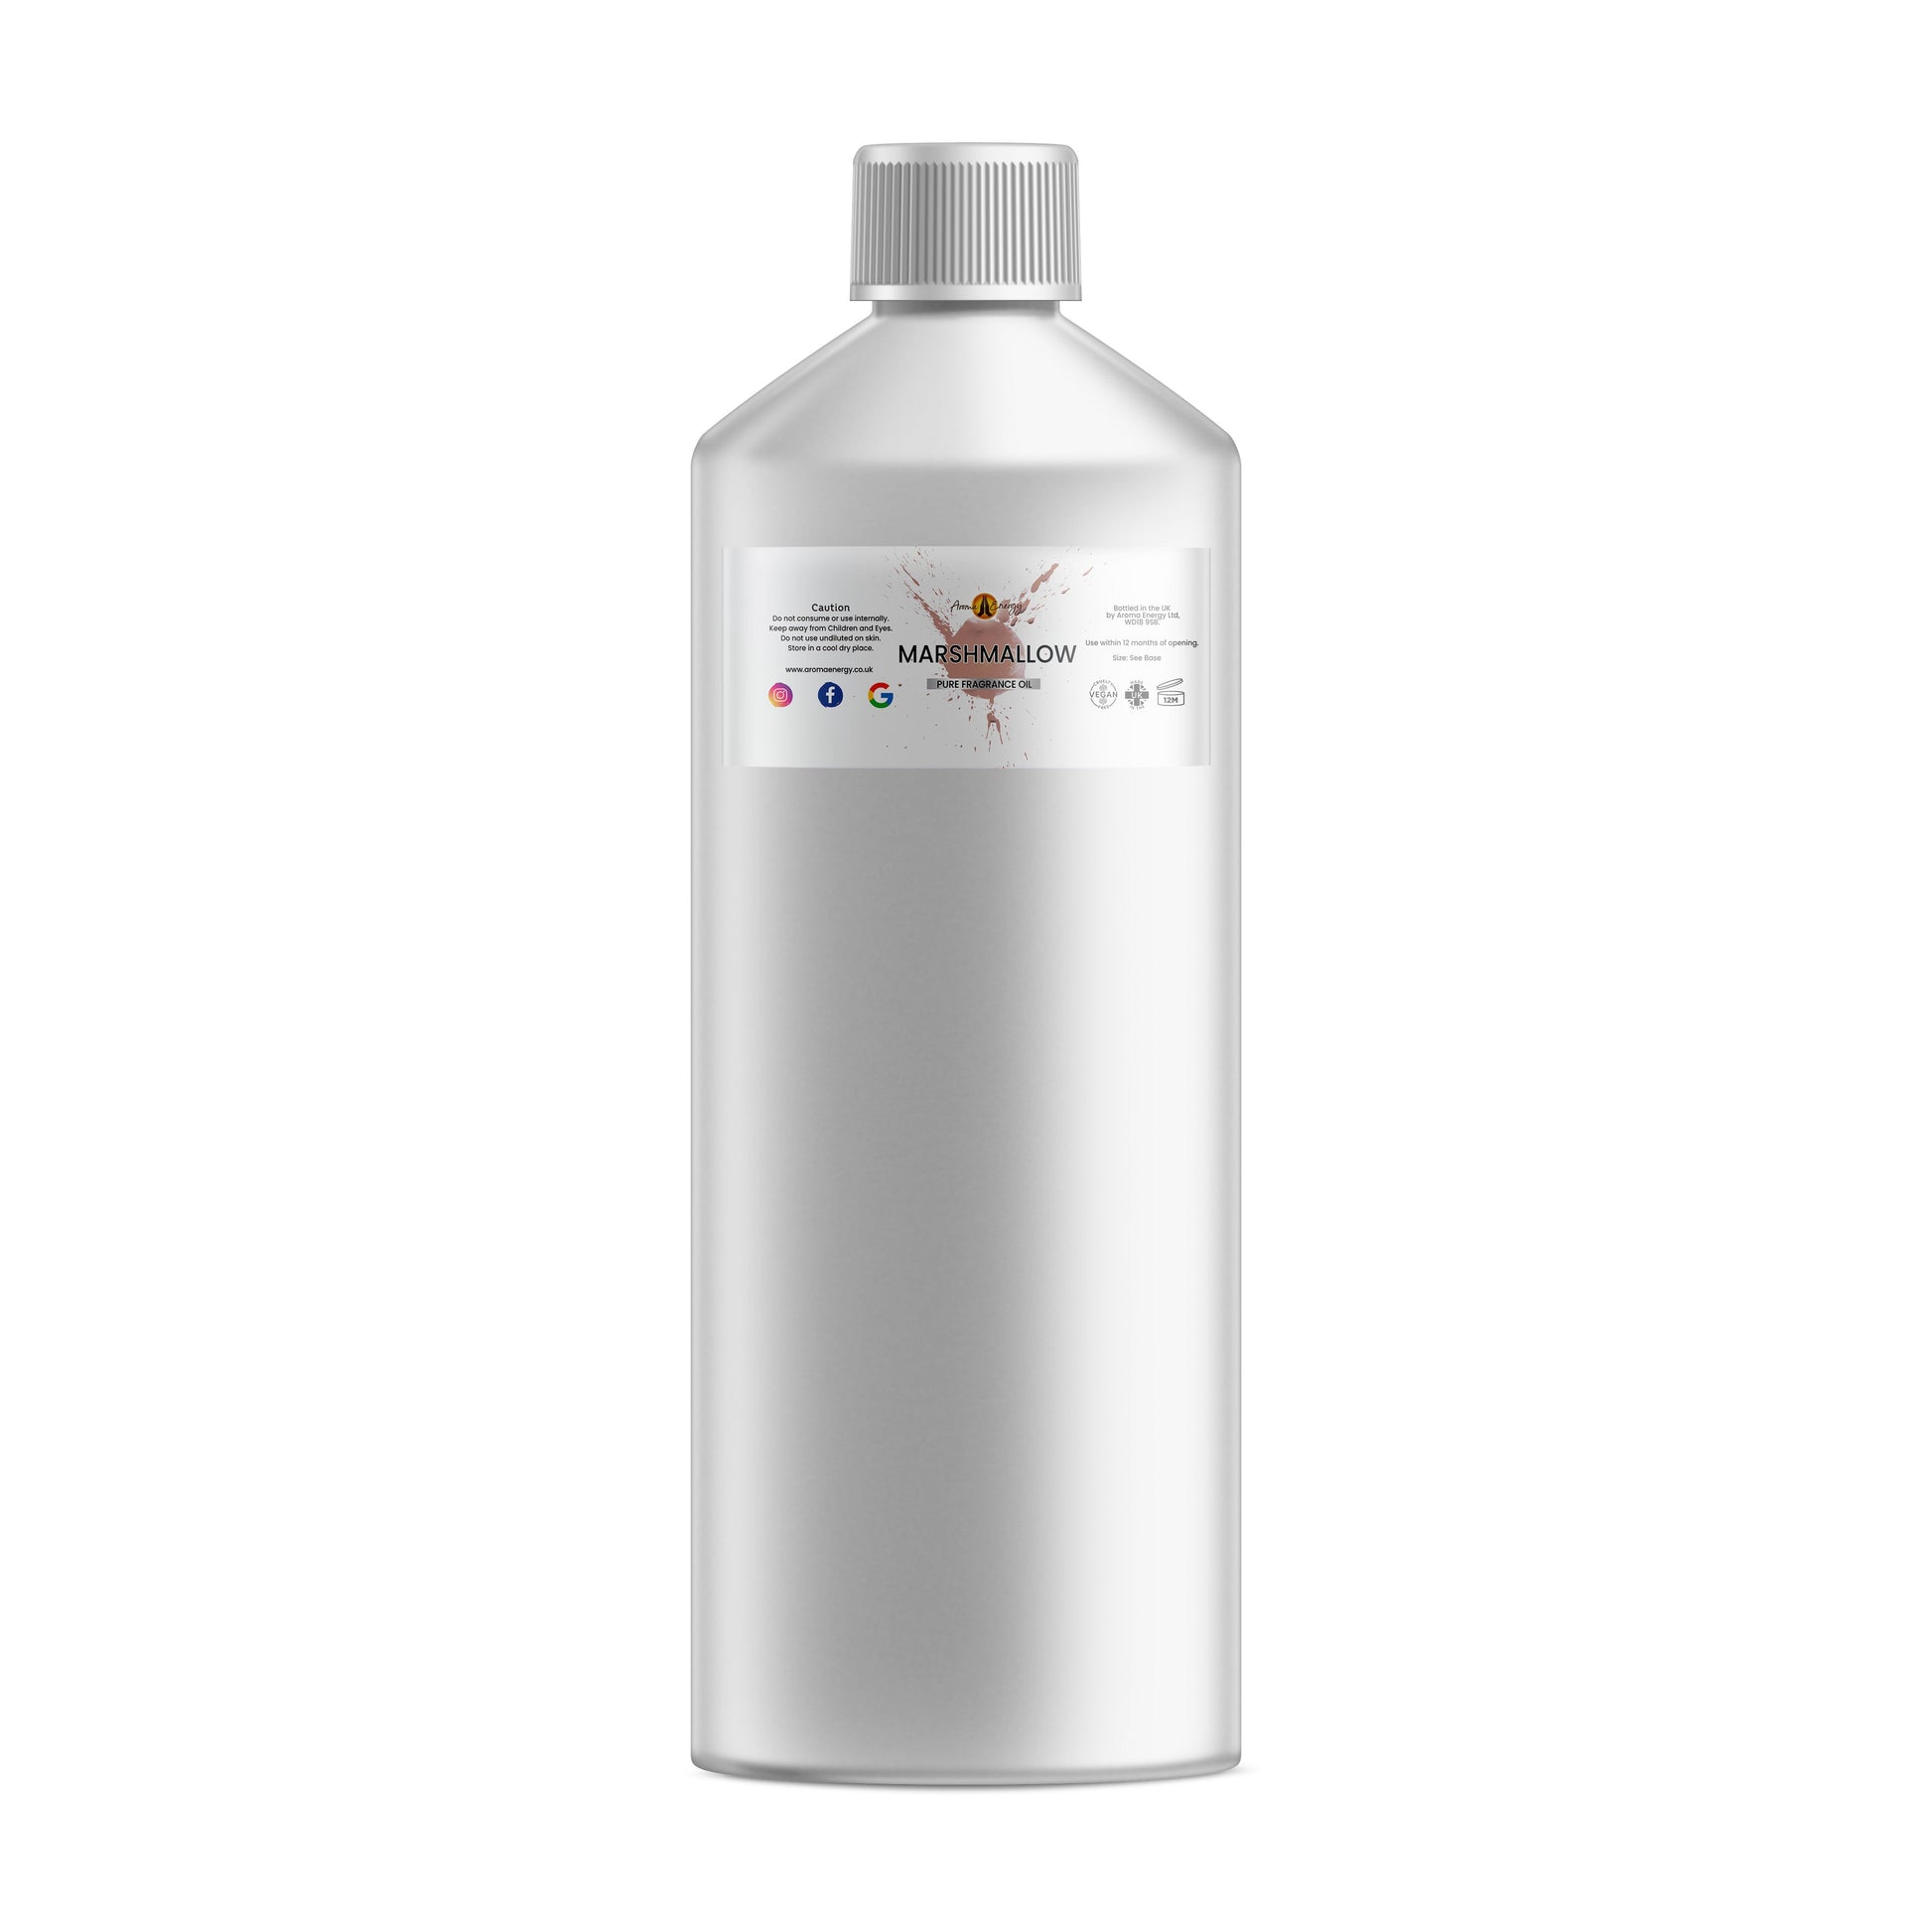 Marshmallow Fragrance Oil - Wholesale - Aroma Energy